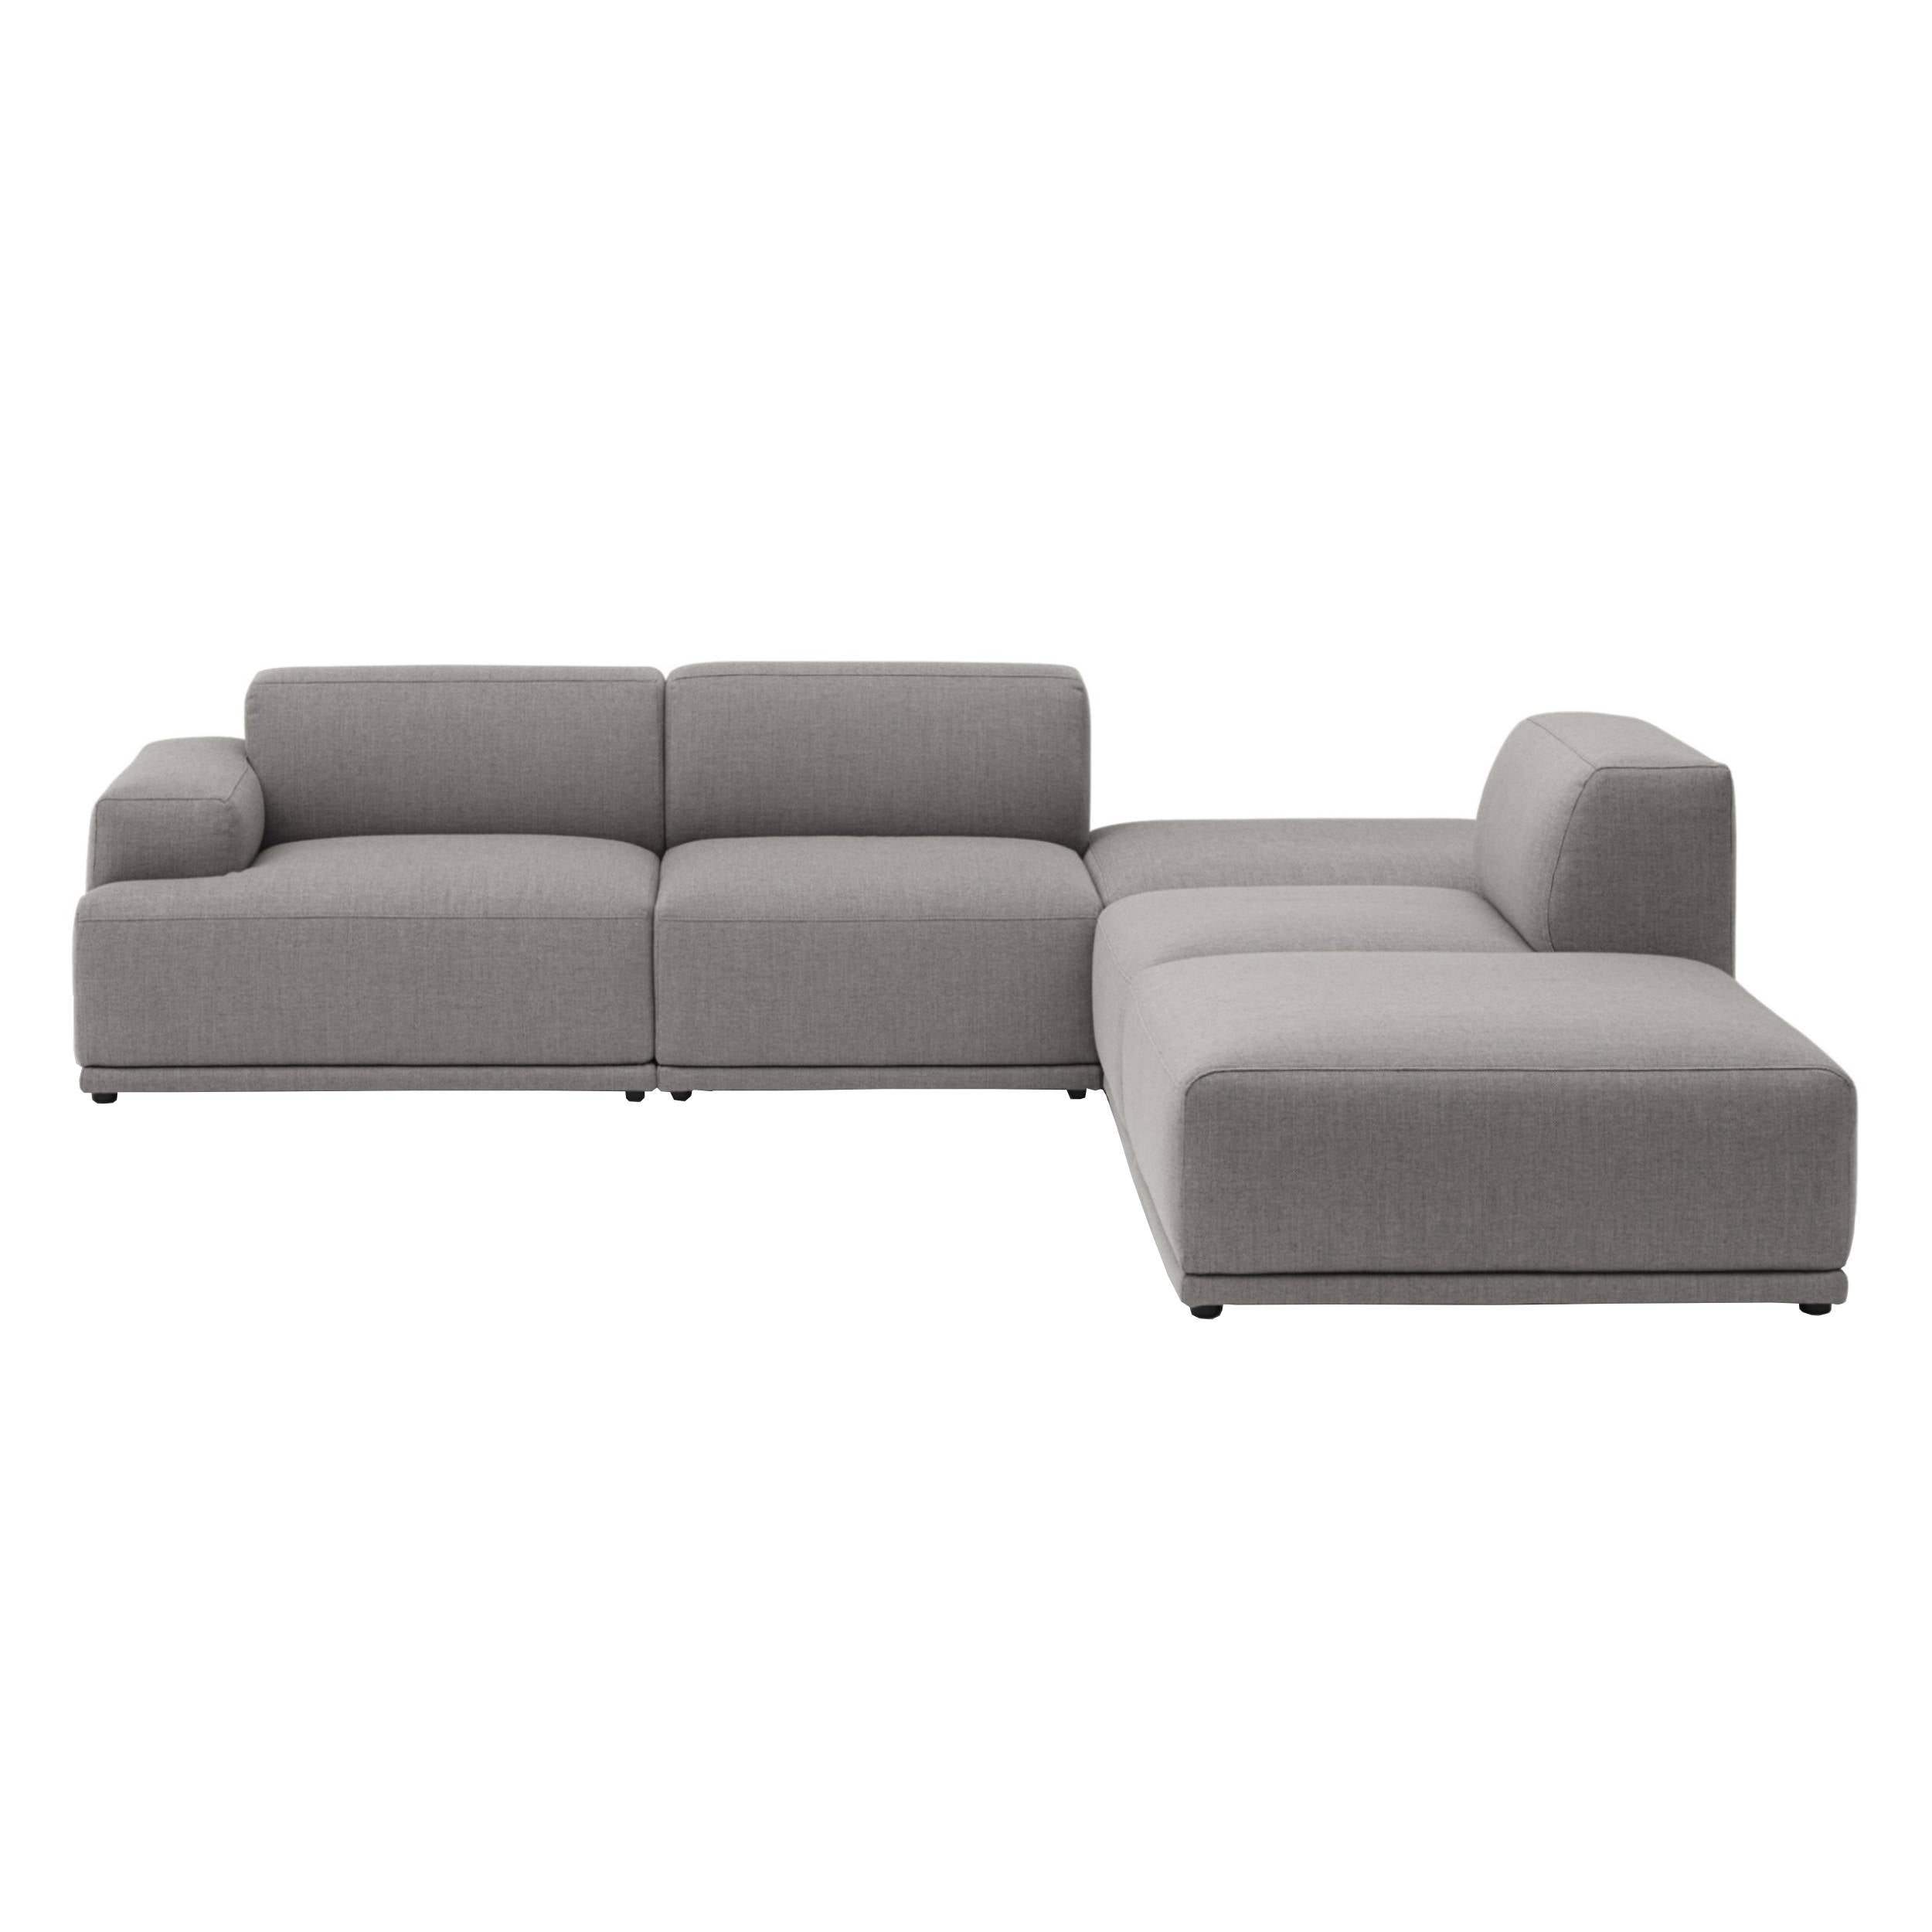 Connect Soft Modular Sofa: Corner + Configuration 3 + Stocked: Re-wool 128